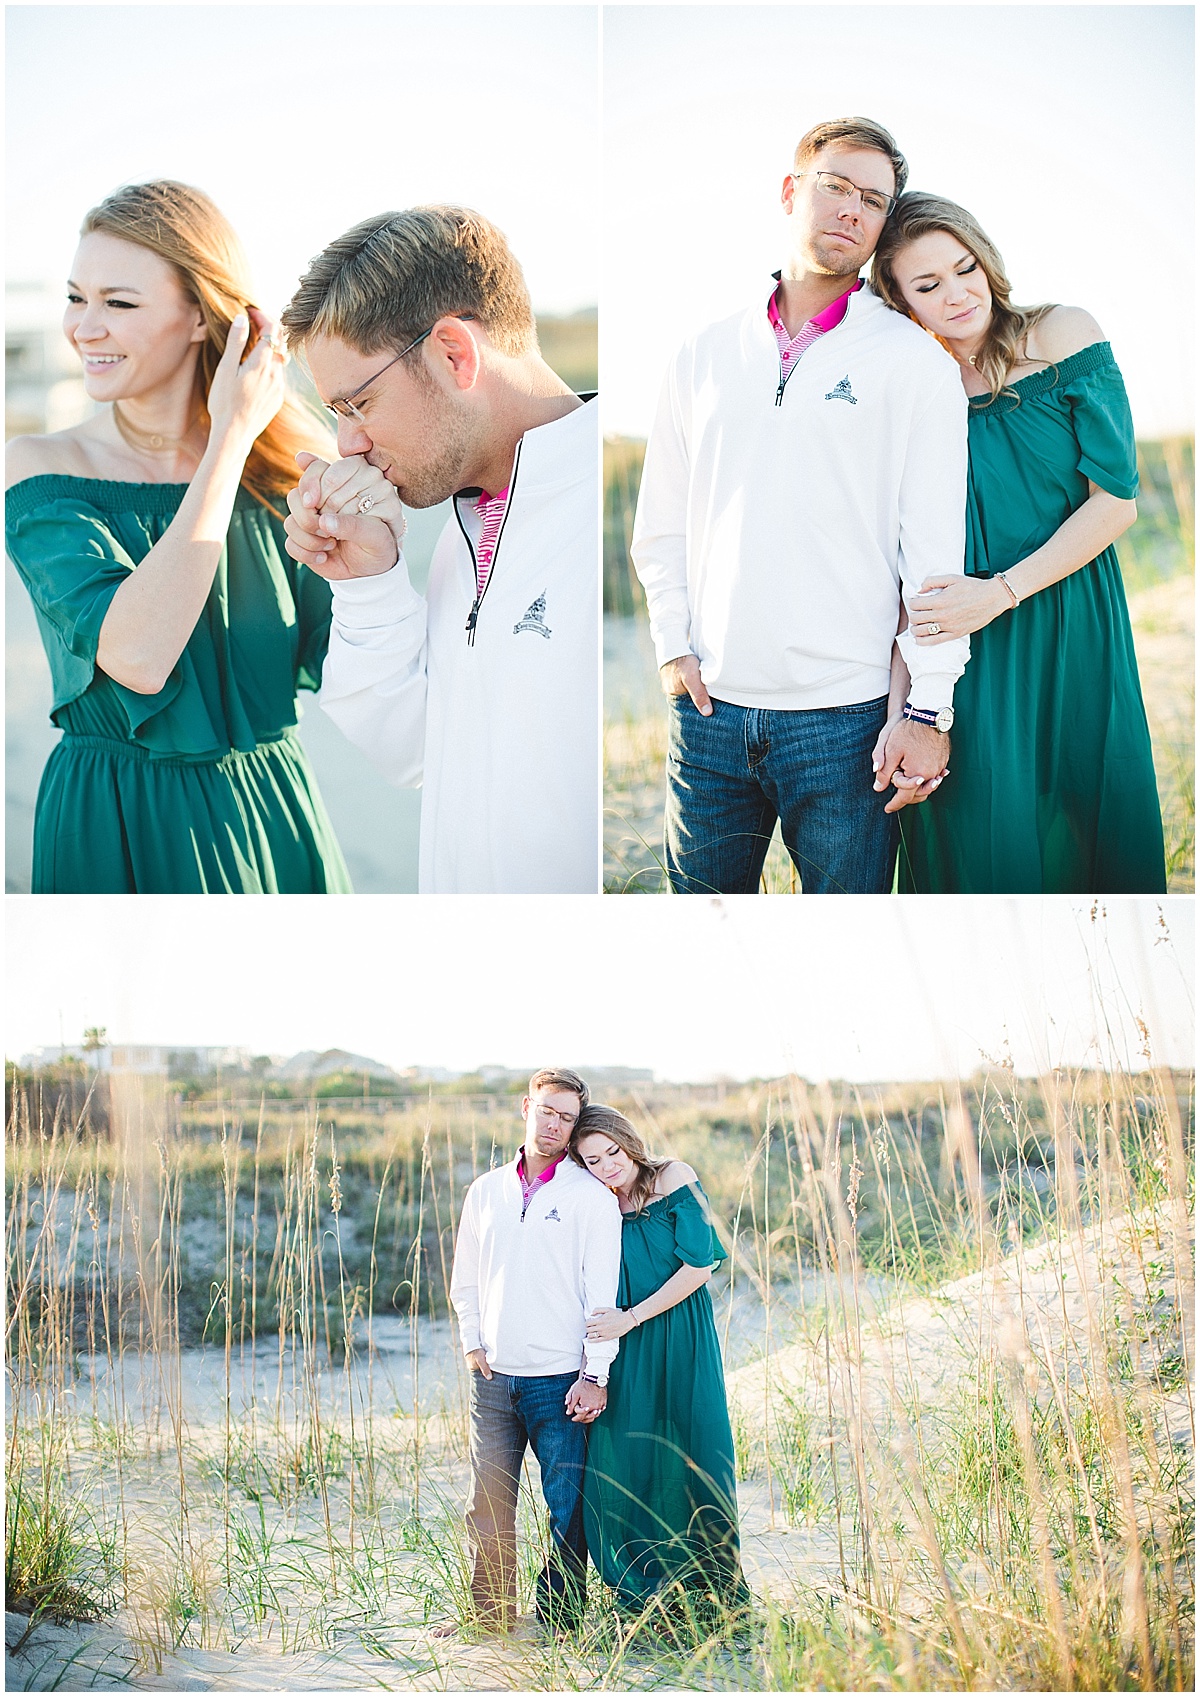 Tybee beach engagement session - savannah wedding photographer